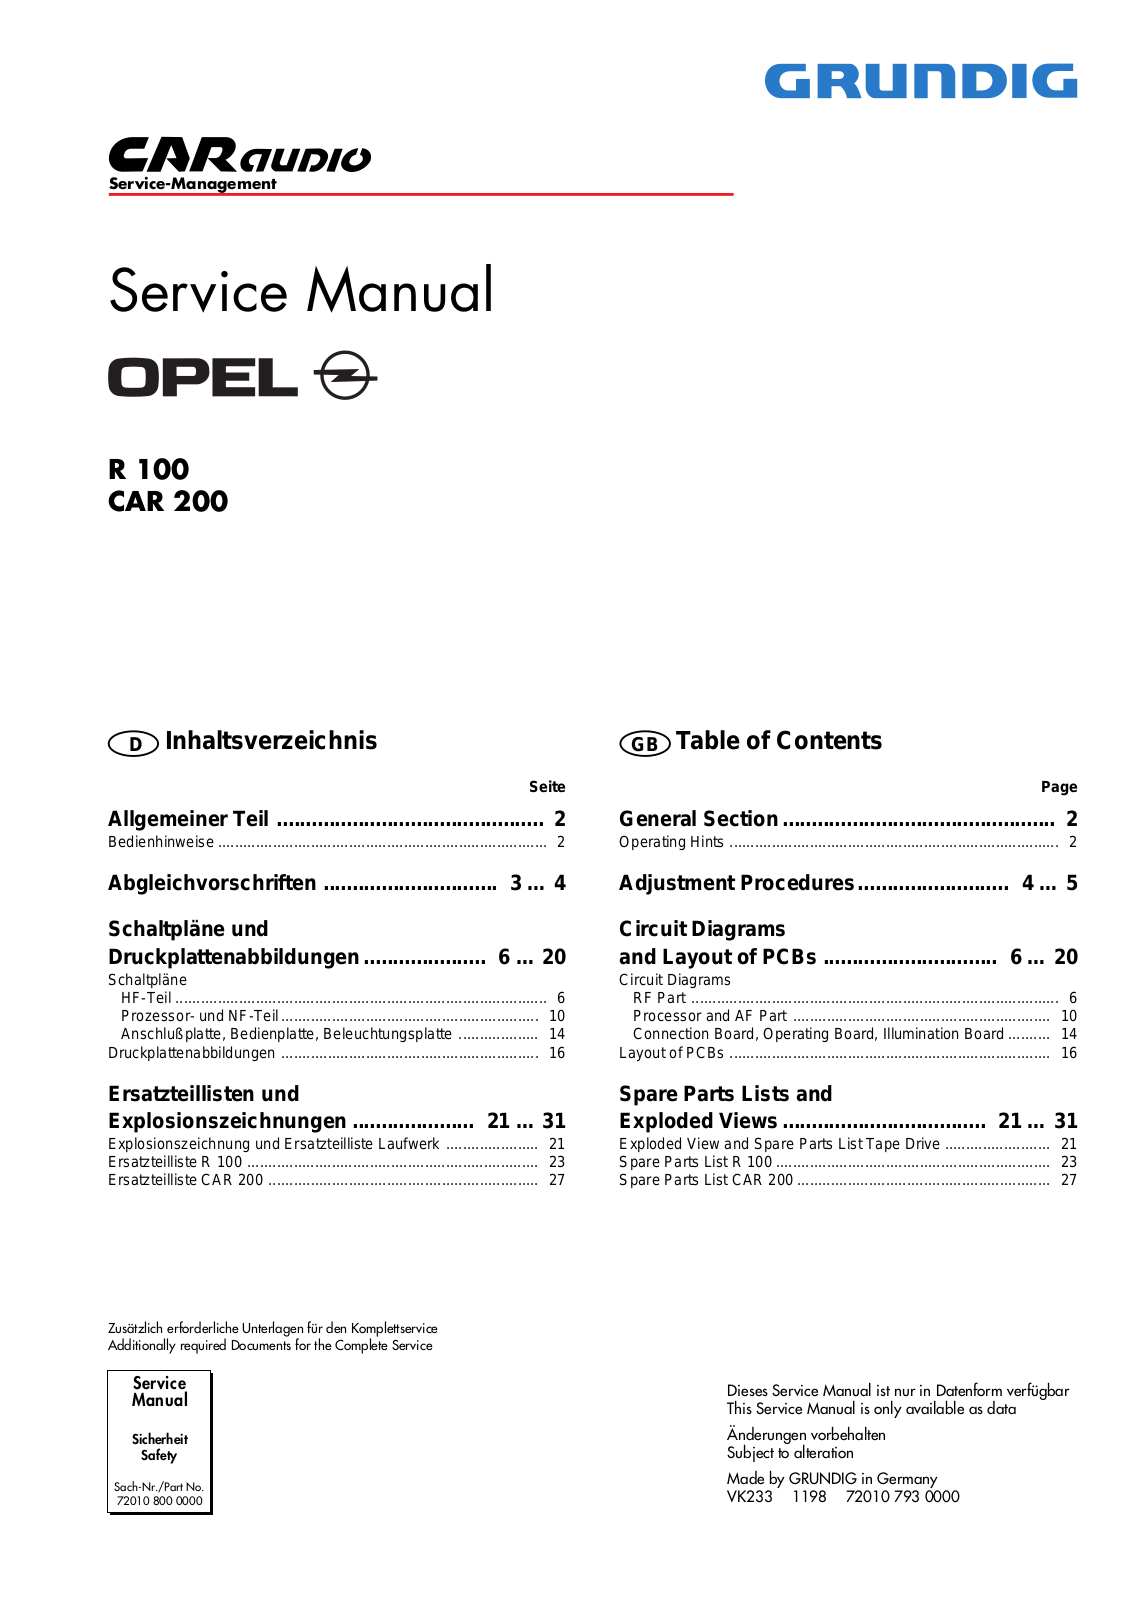 Grundig CAR 200, R 100 Service Manual